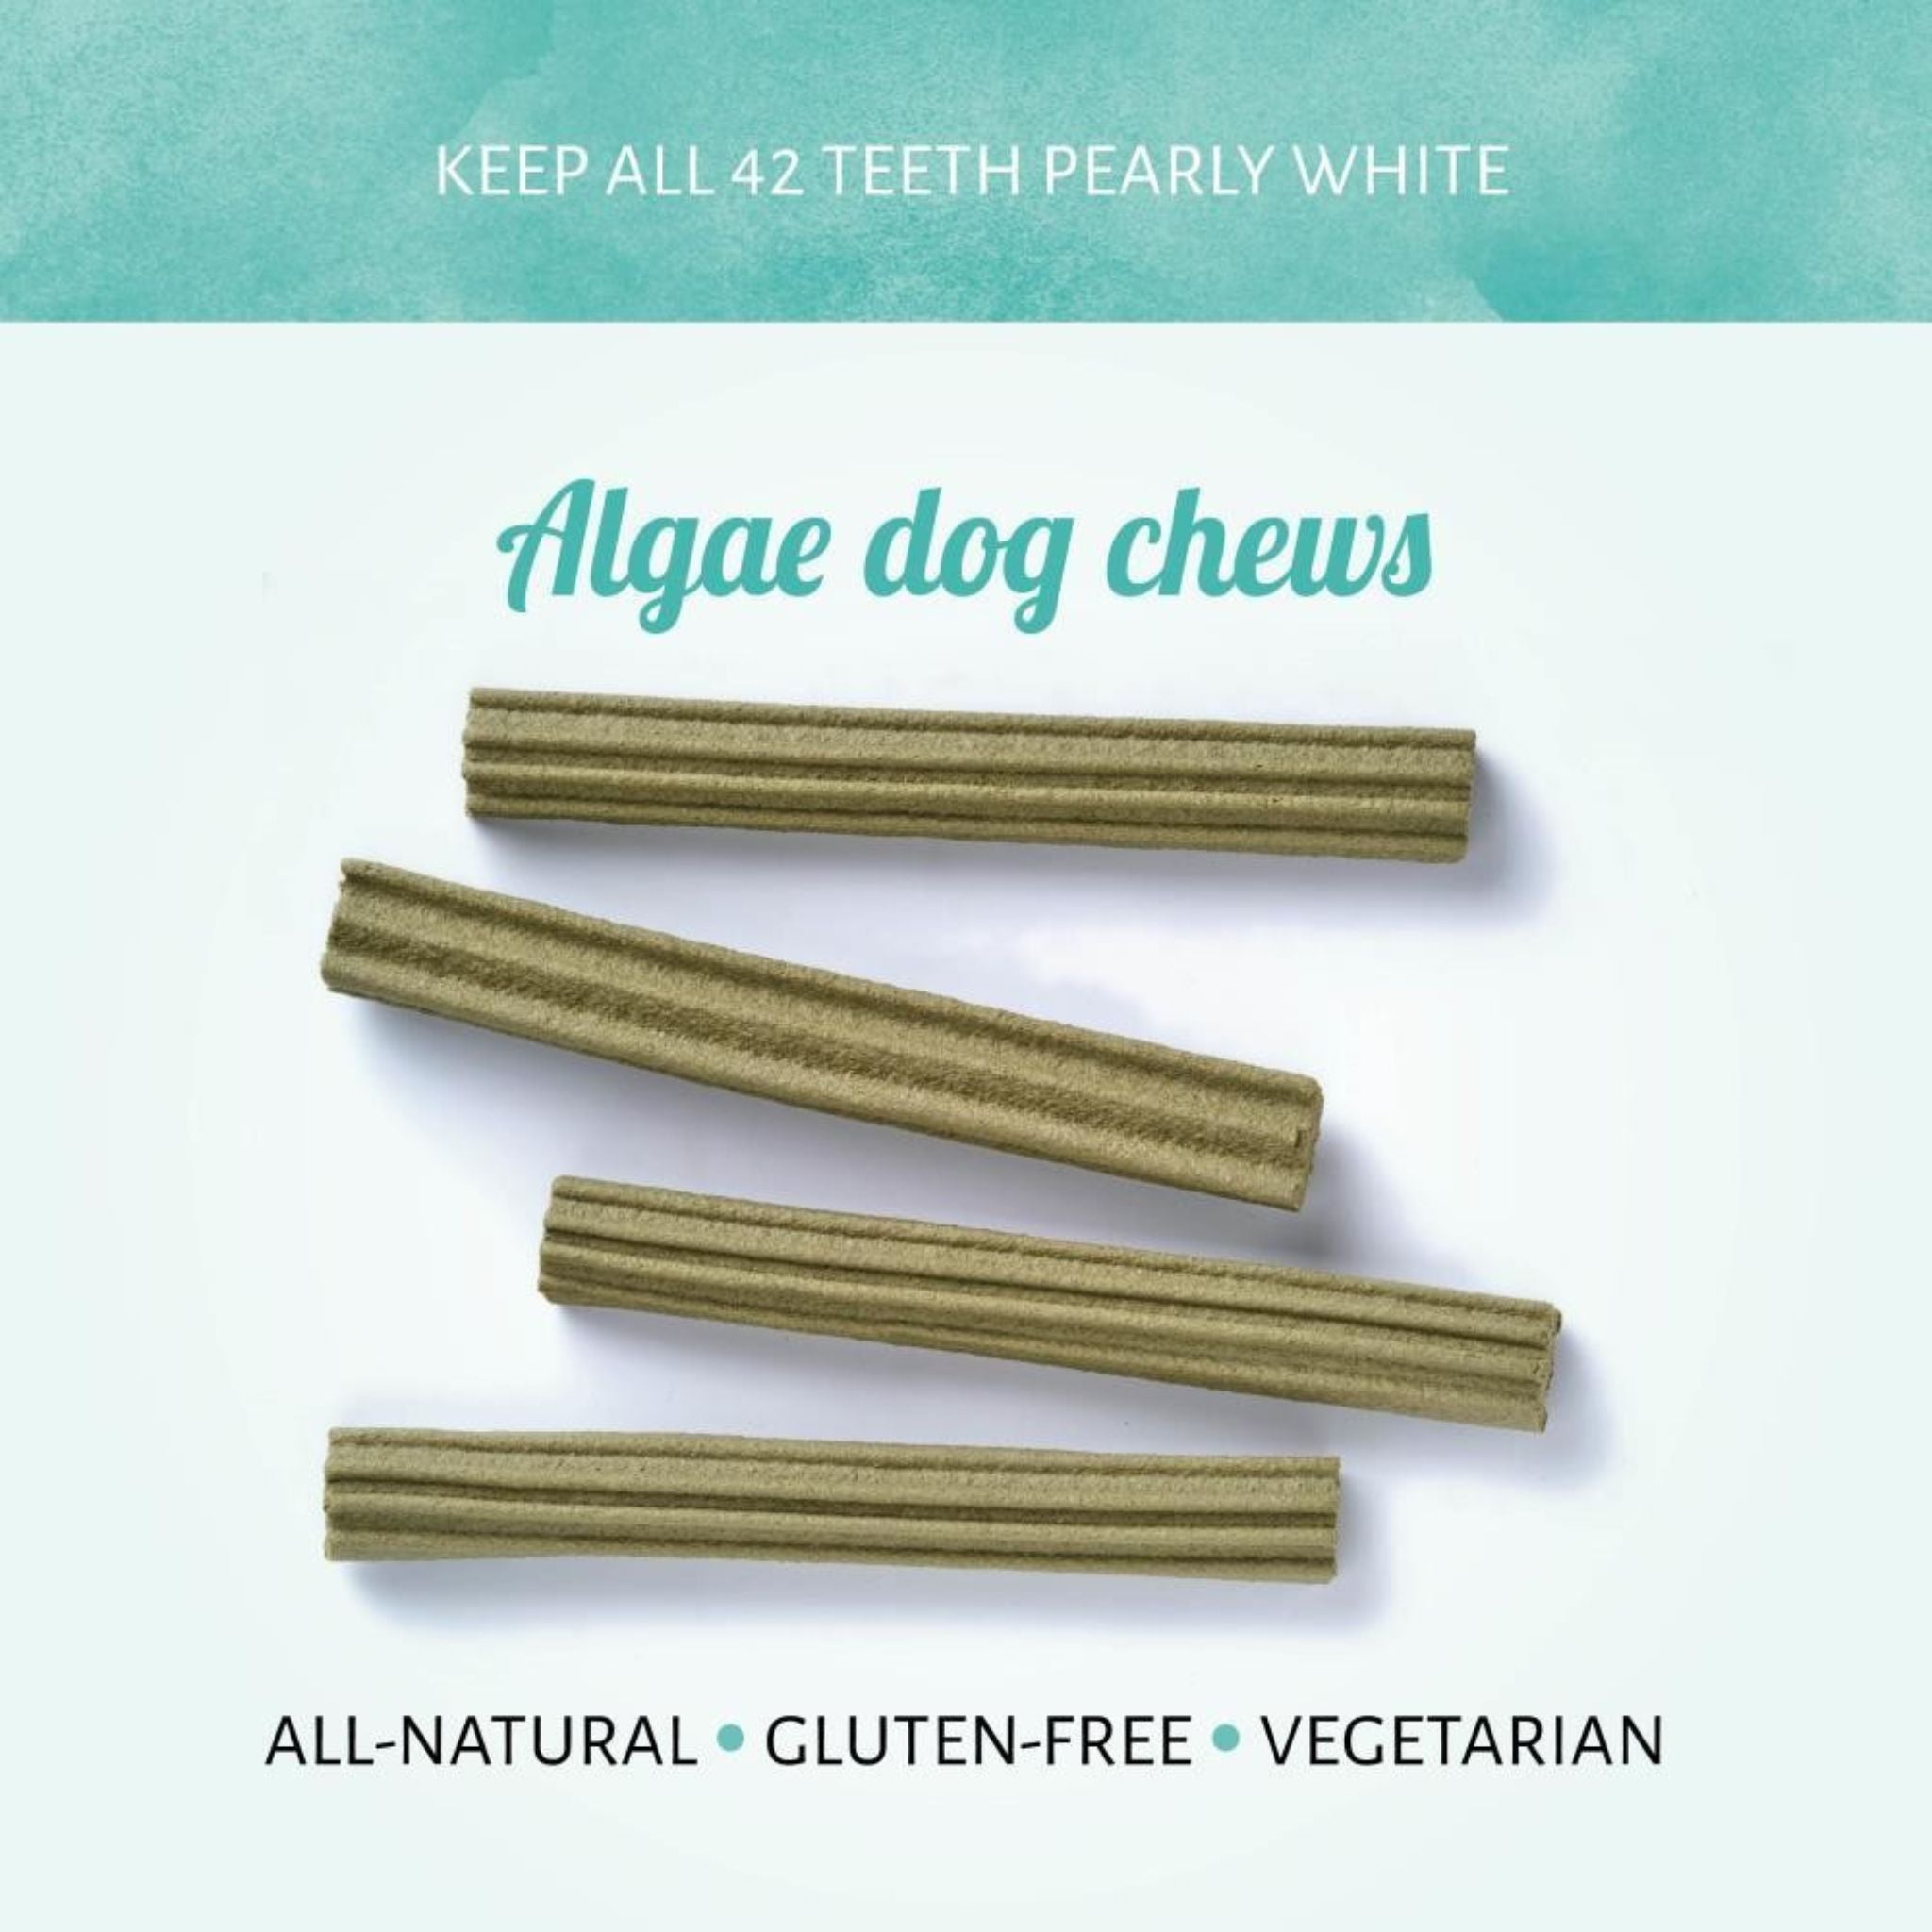 Antos Cerea vegane Kauartikel Hund | Algenkaustange Hund | Fairtails